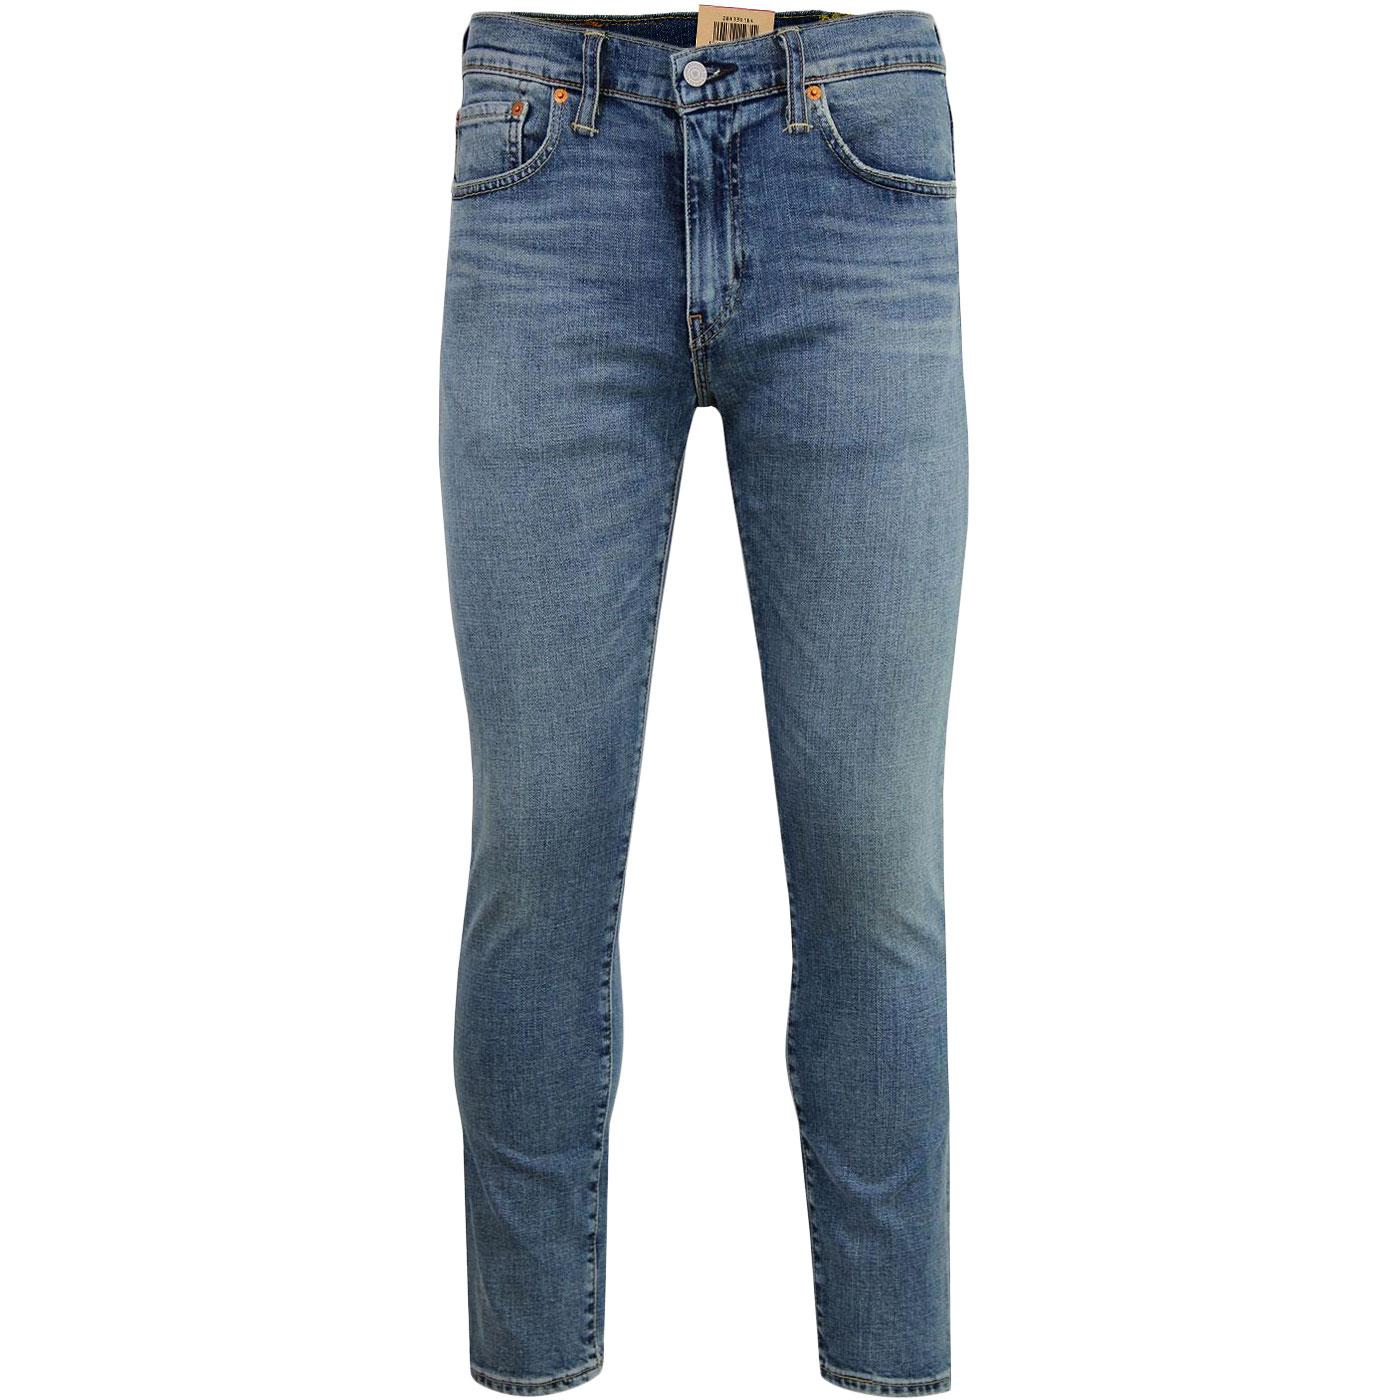 512 slim taper fit warp stretch jeans